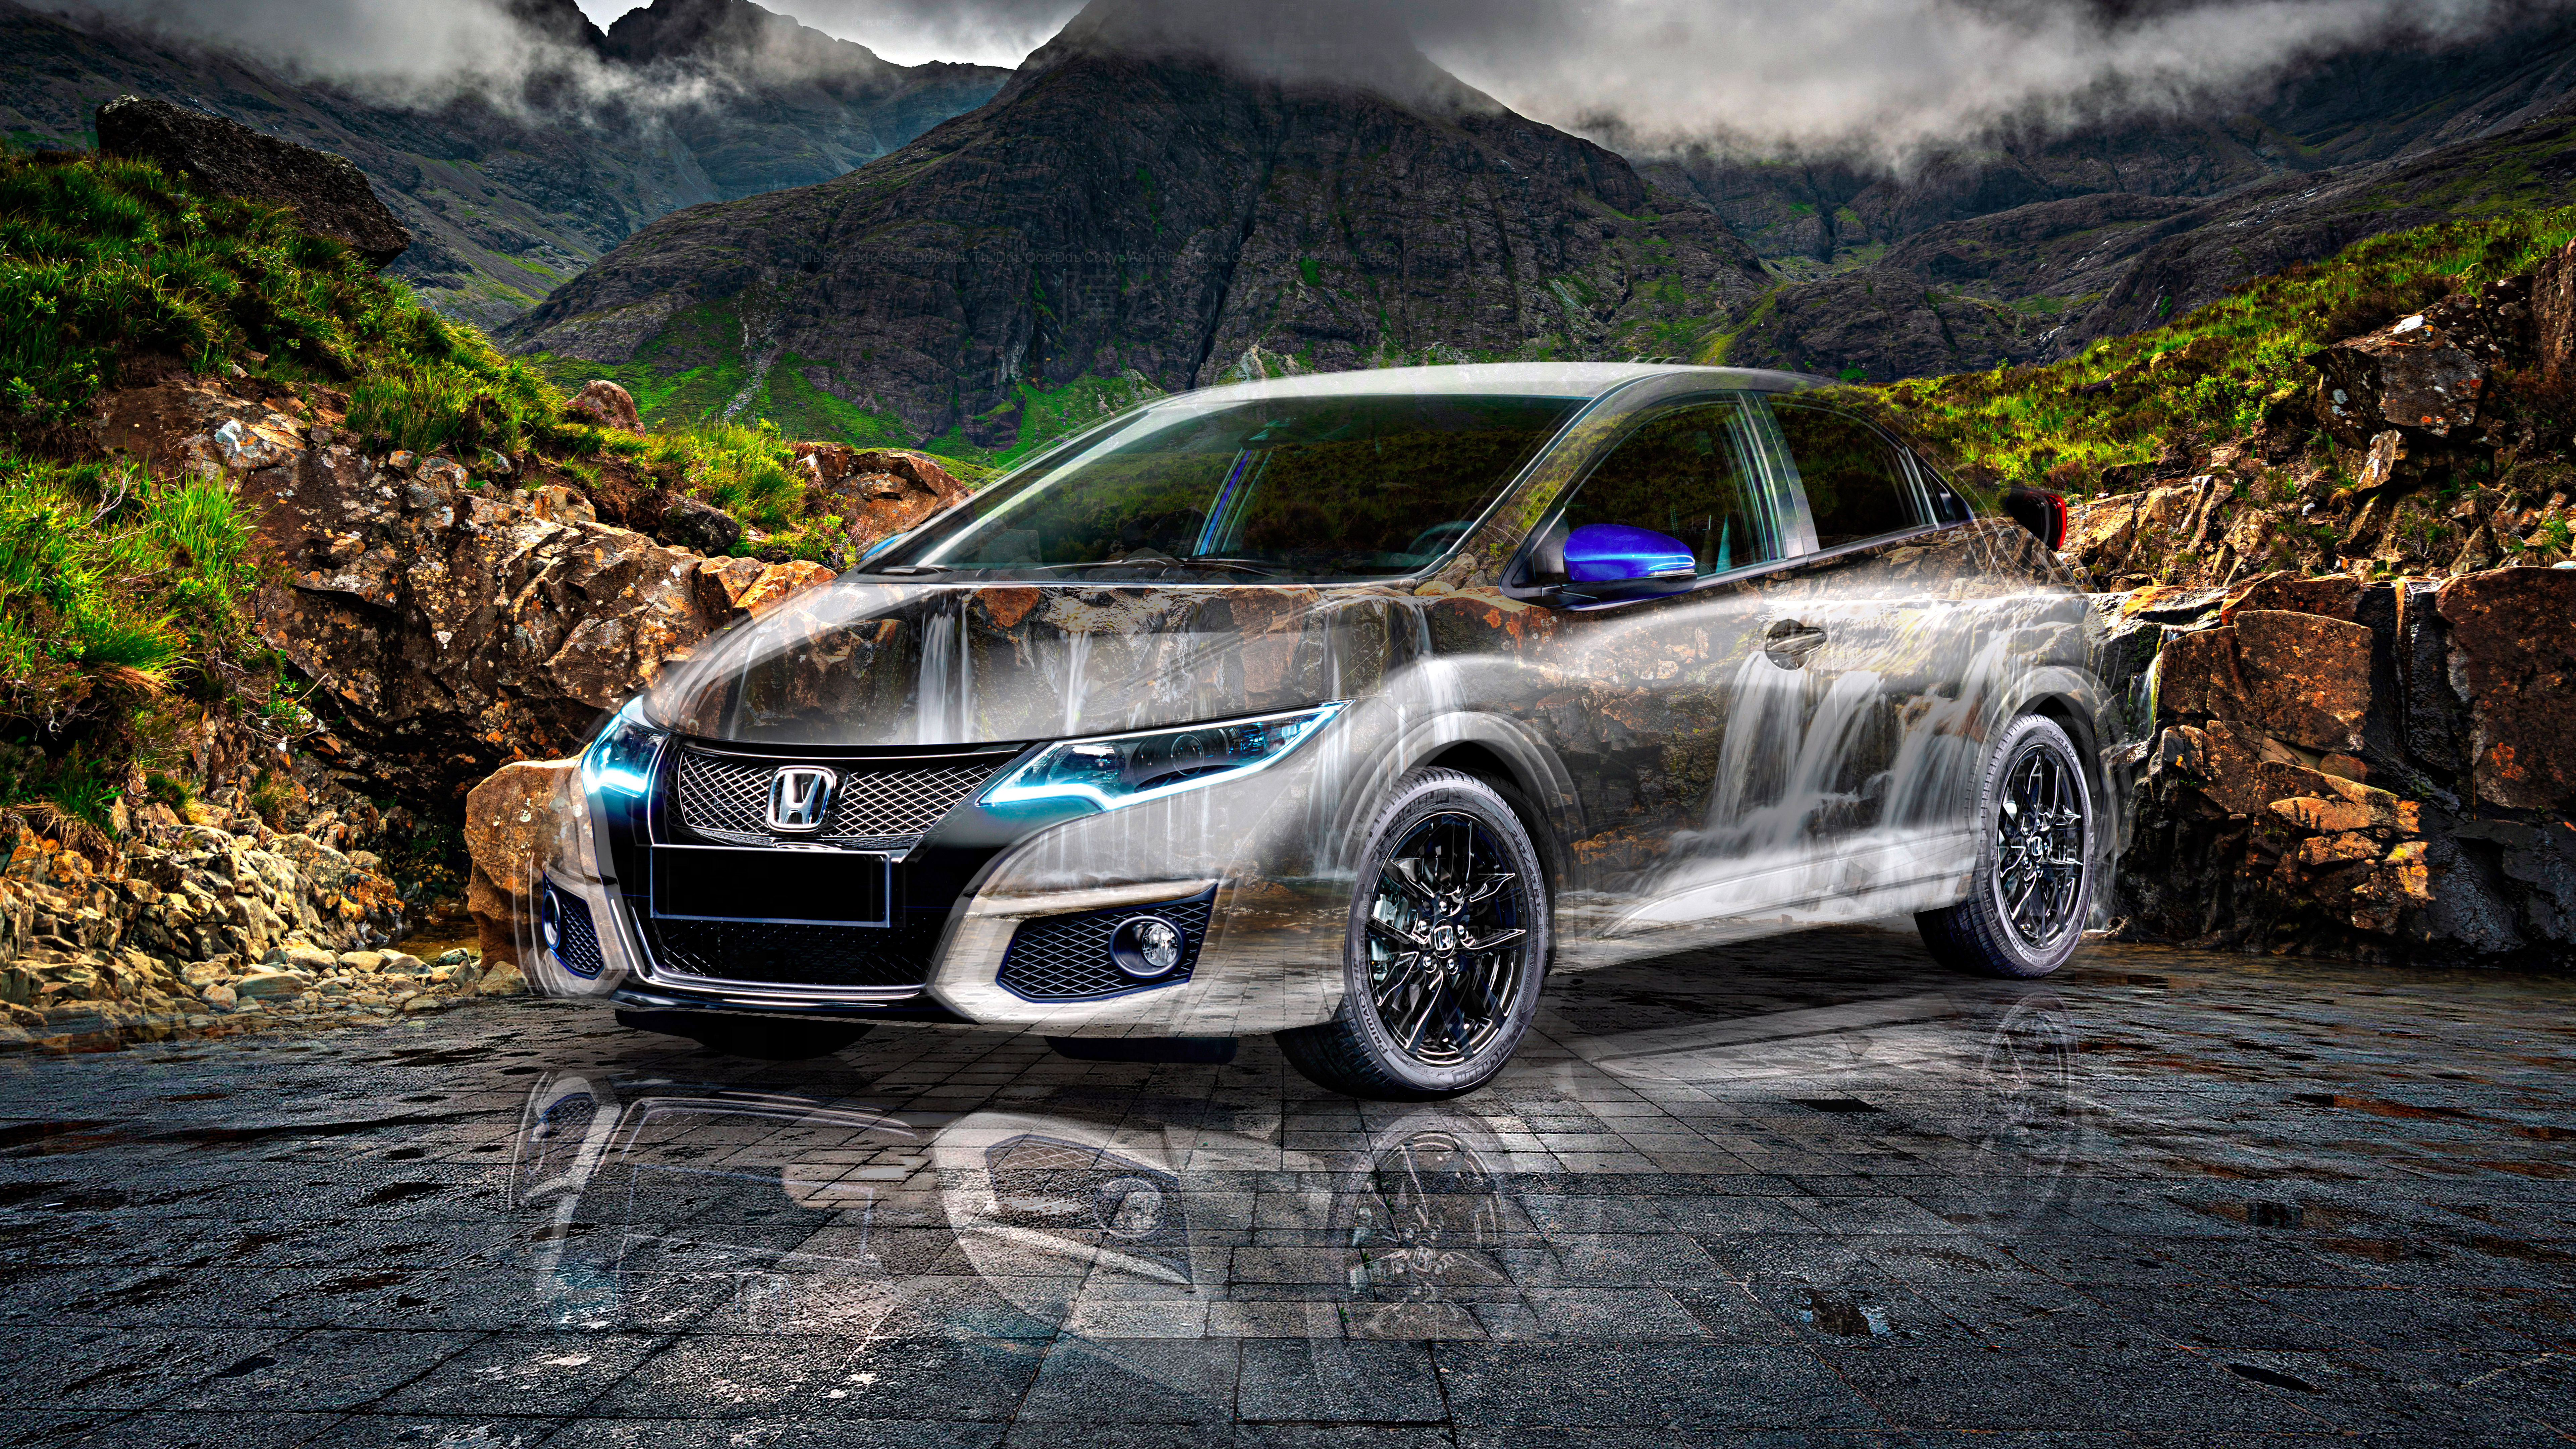 Honda-Civic-Sport-Super-Crystal-Invalid-Soul-Waterfall-Tactile-Hologram-TonyCode-Art-Car-